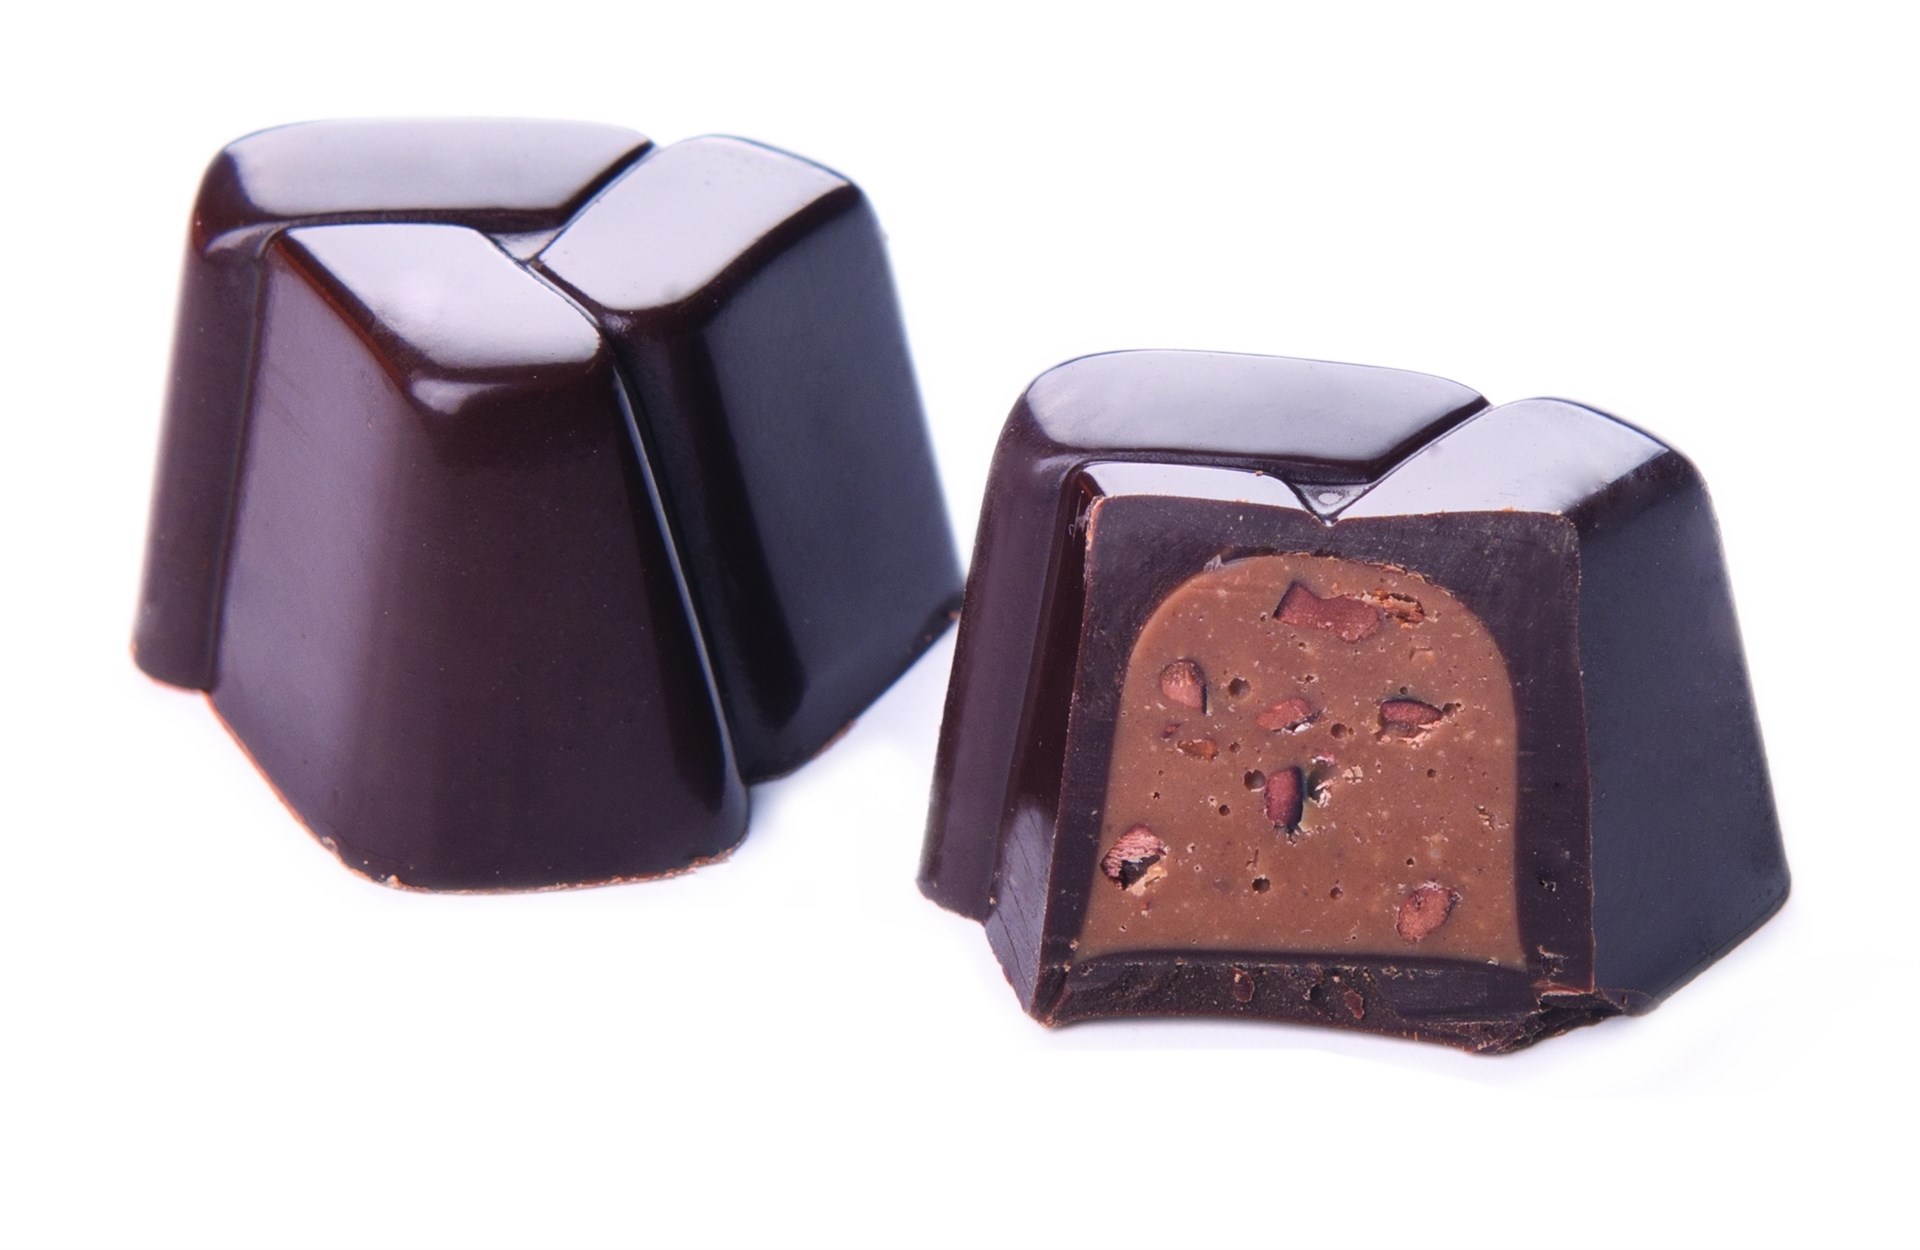 PRESTIGE DARK CHOCOLATE, HAZELNUT CREAM WITH COCOA NIBS BY GENAUVA CHOCOLATES BY GENAUVA CHOCOLATES